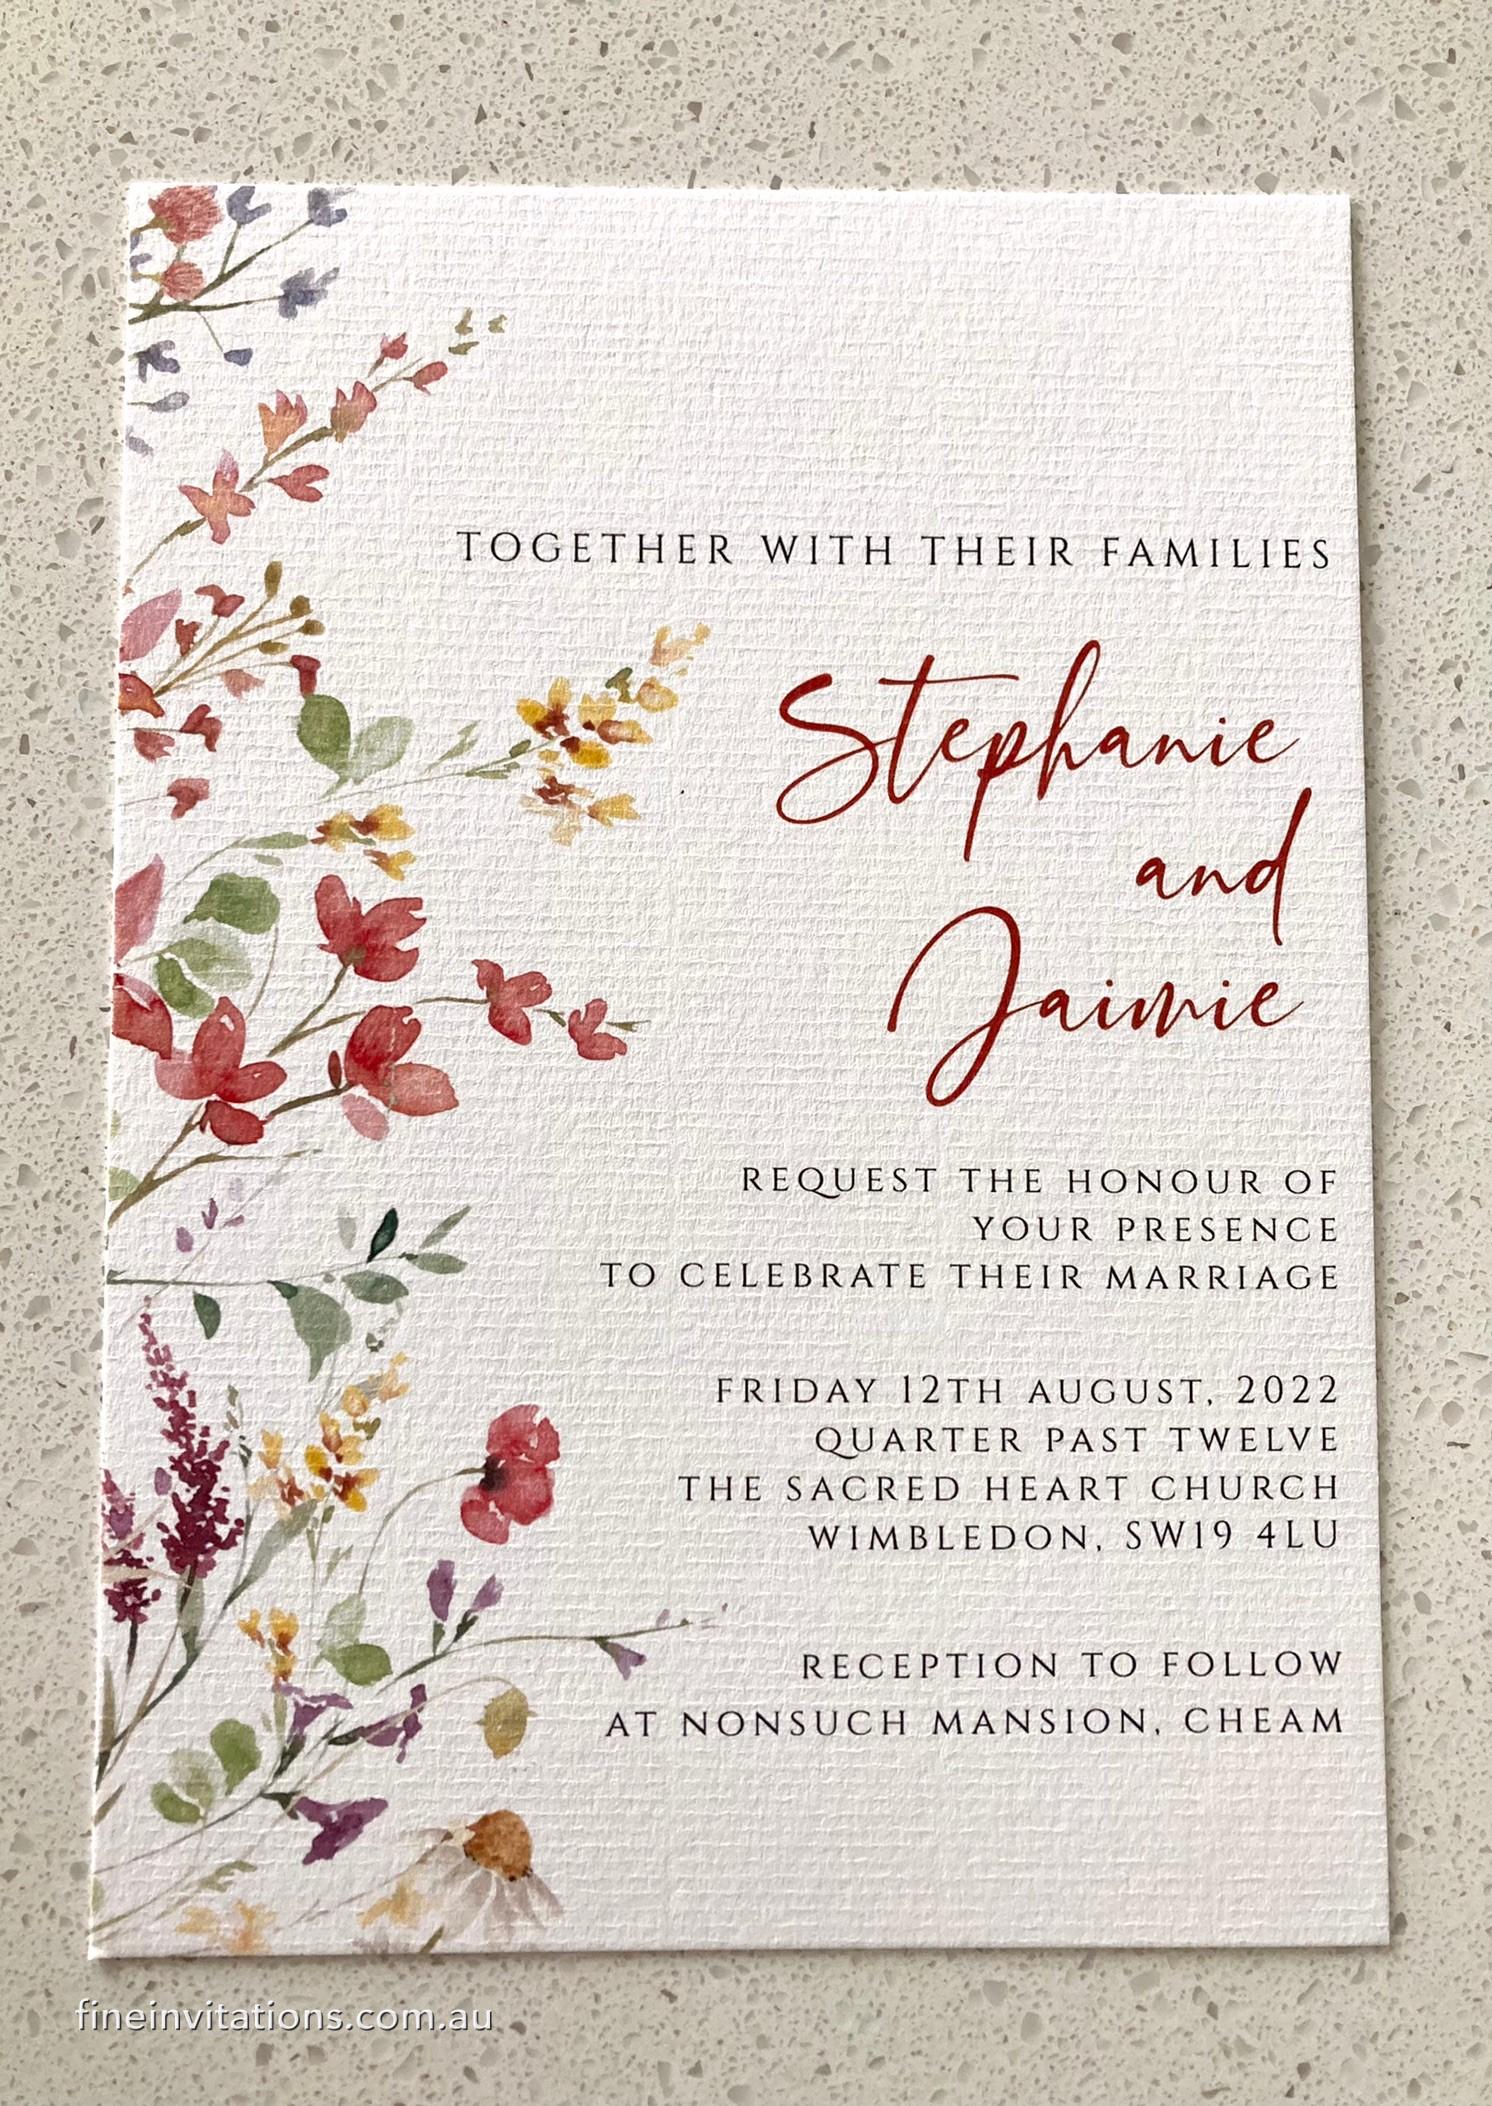 Sydney wedding invitation printing